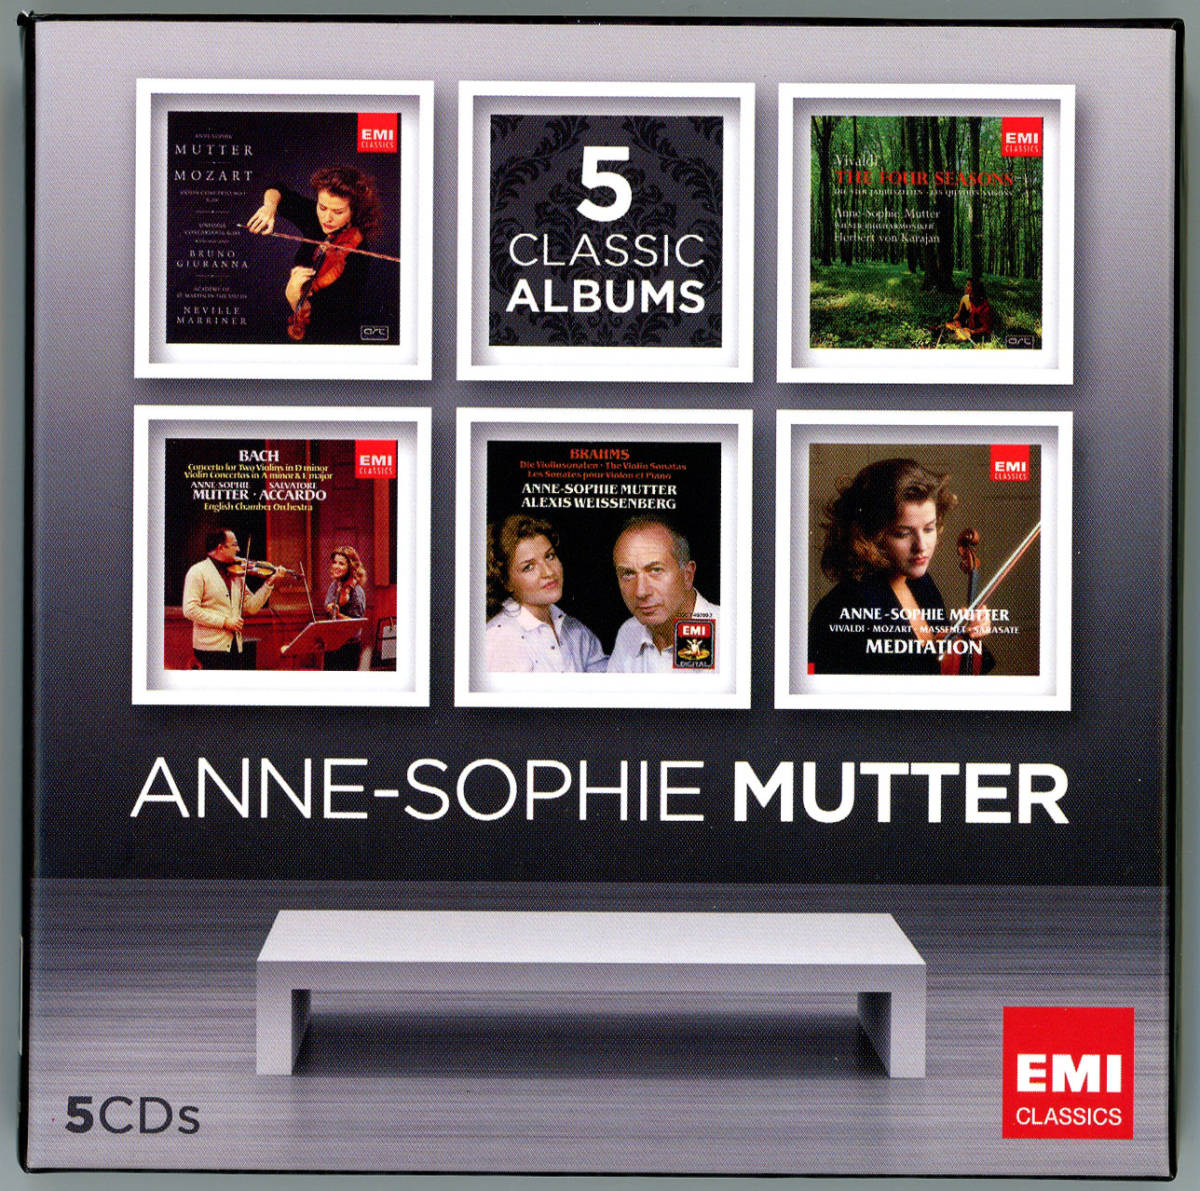 Anne-Sophie Mutter - 5 Classic Albums, Box Set, 5CDs, 輸入盤 (EMI Classics)の画像1